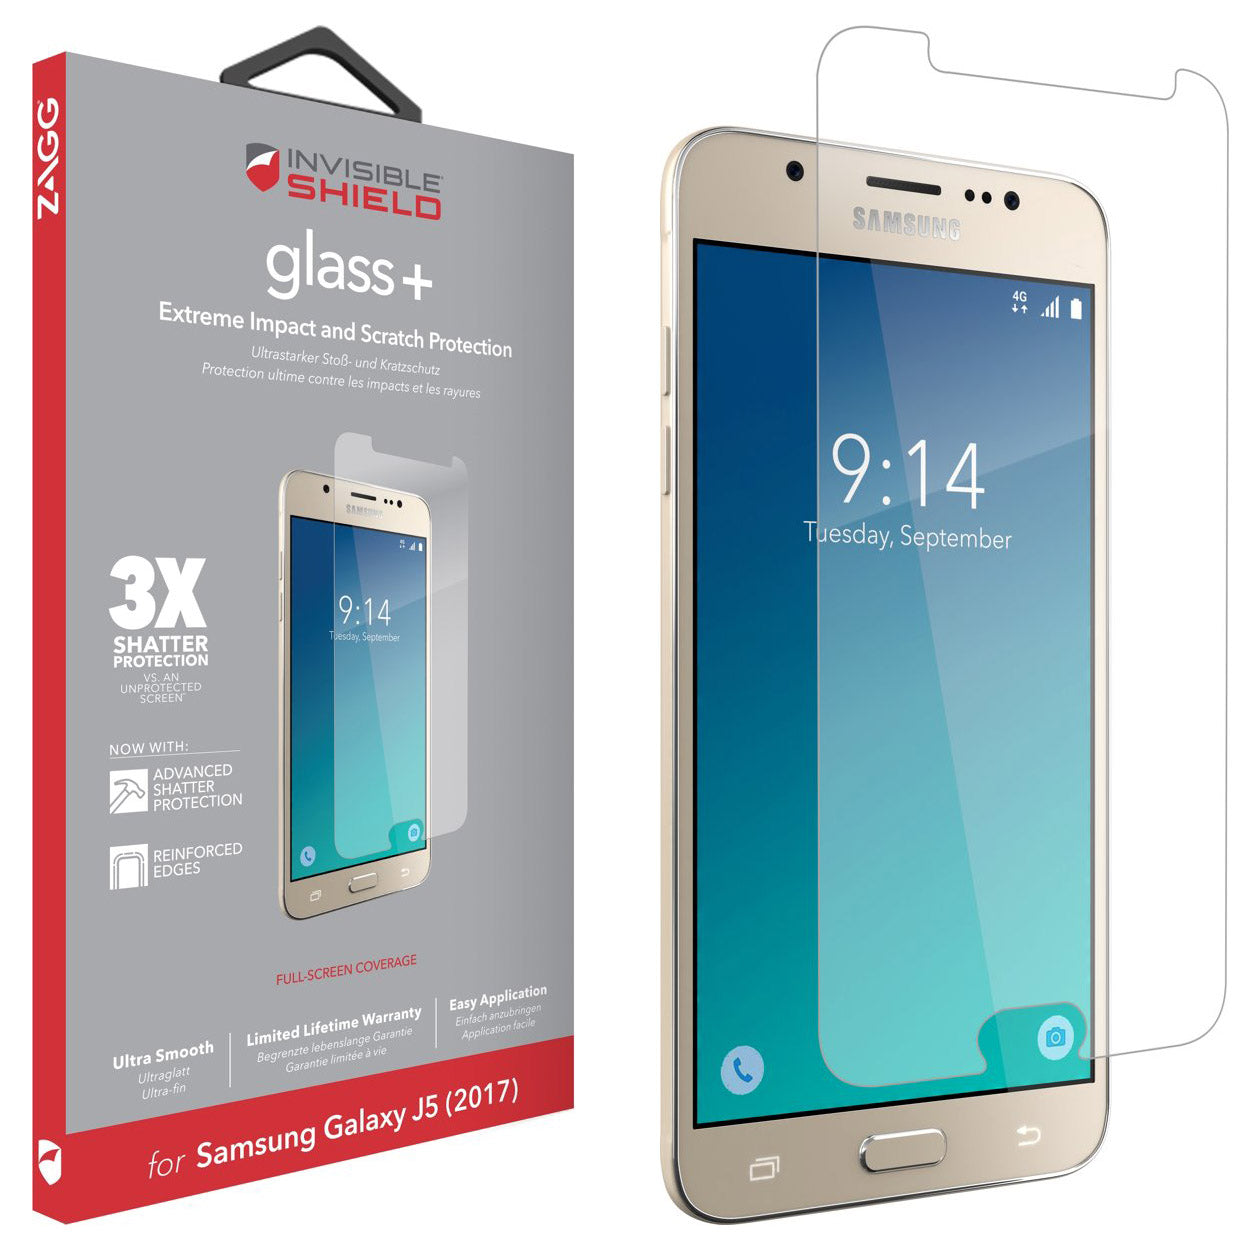 Samsung Galaxy J Series Accessories